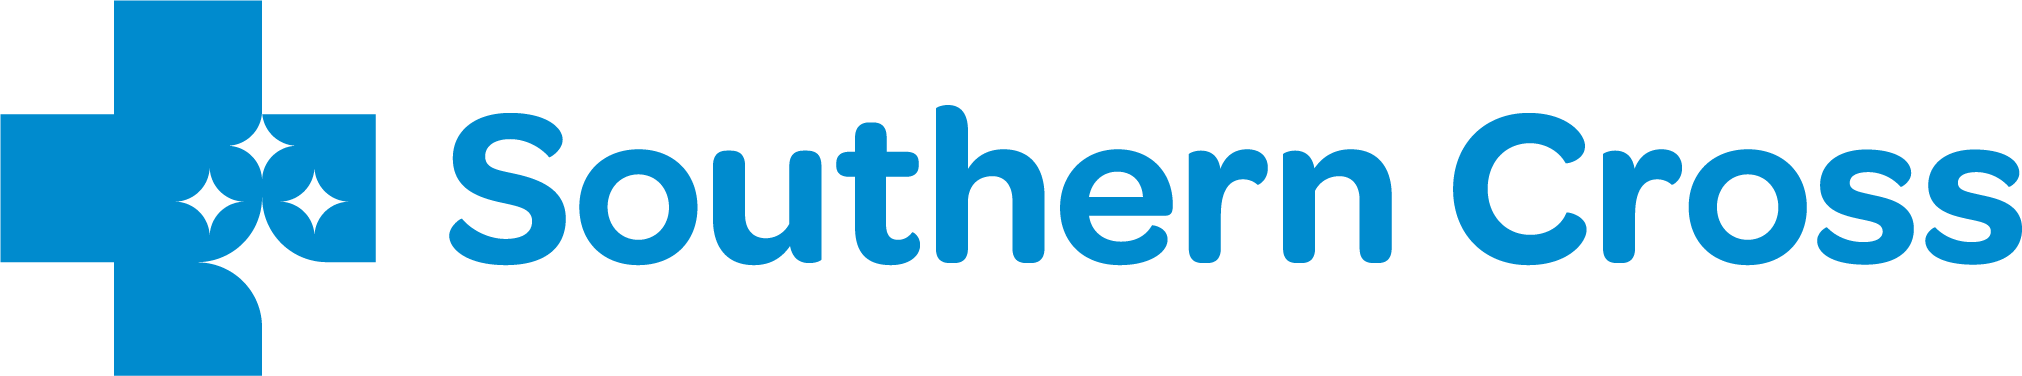 southern-cross-logo-blue-0120